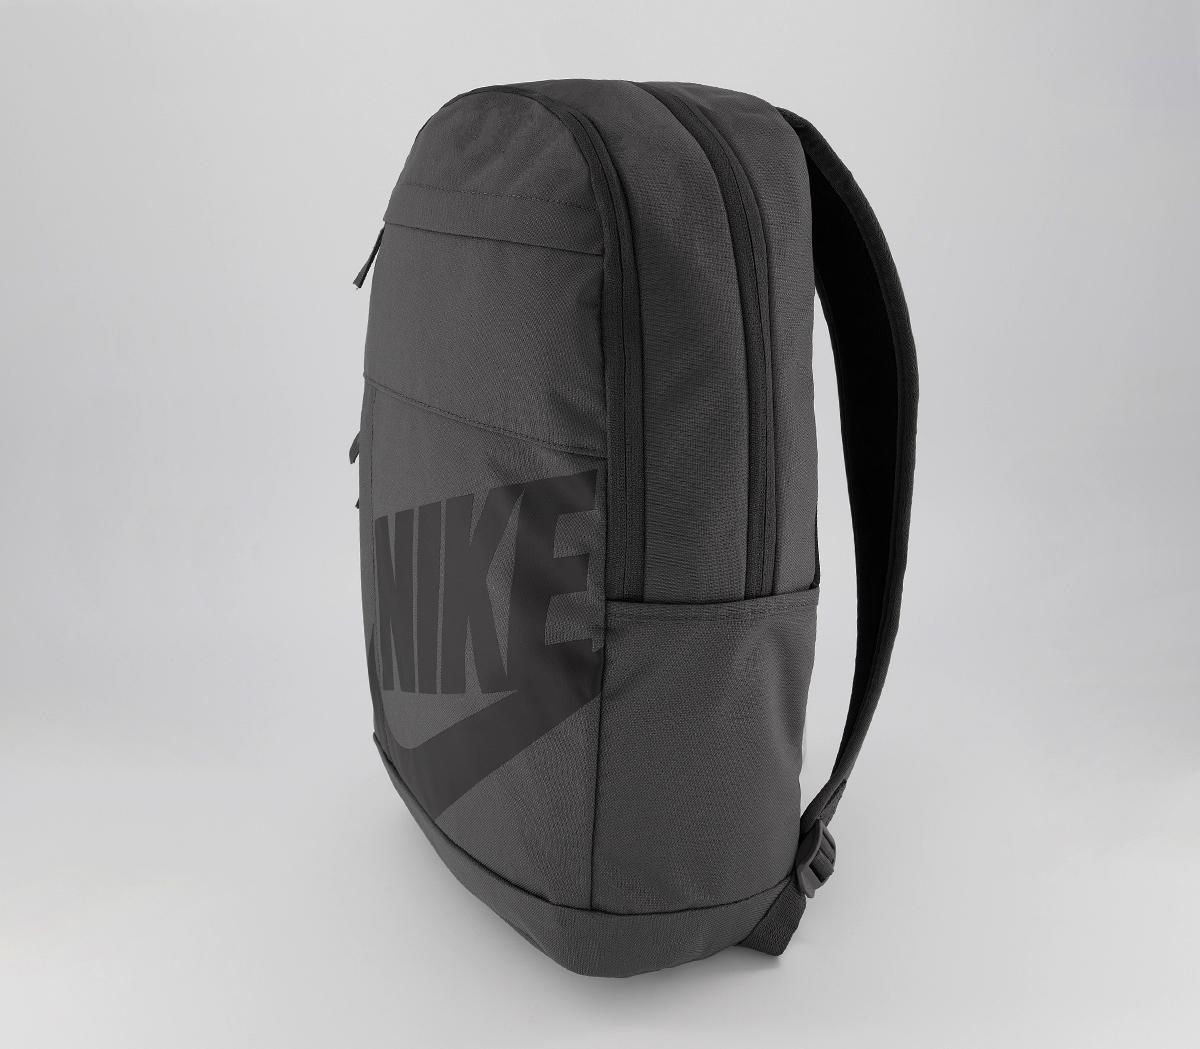 NikeNike Elemental Backpack 2.0Thunder Grey Black